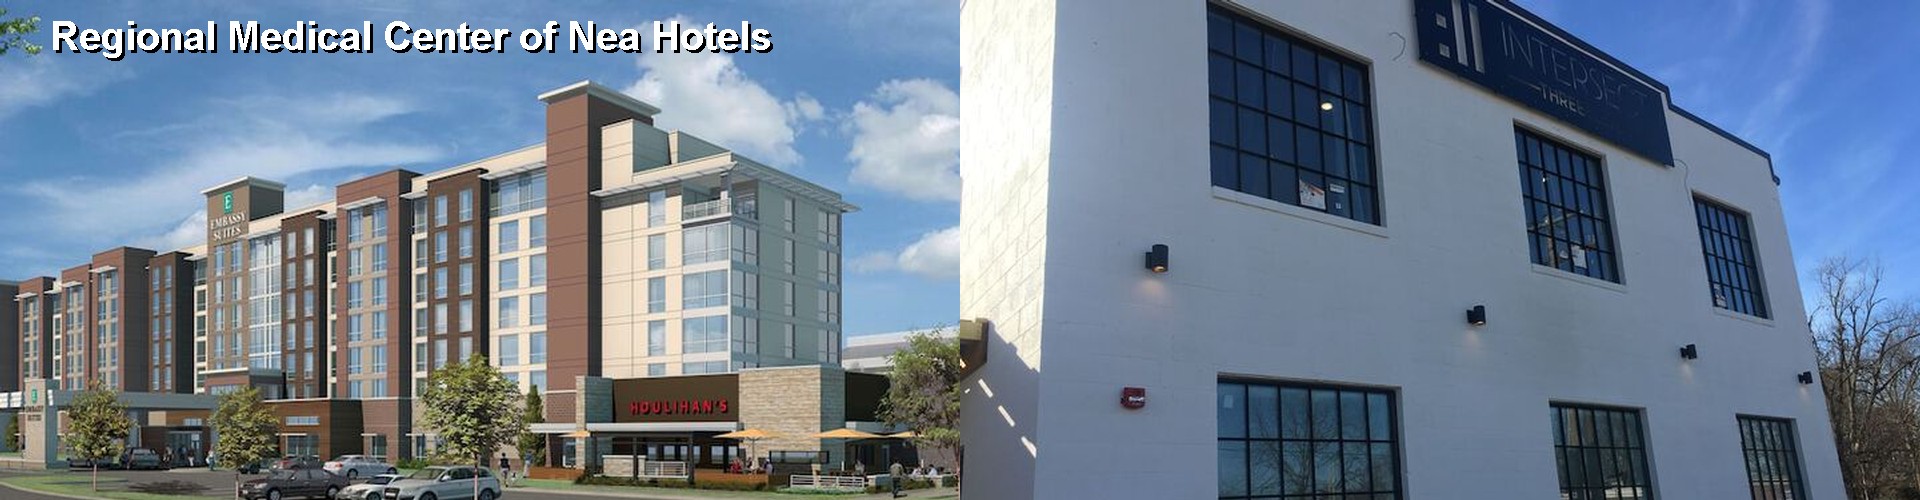 5 Best Hotels near Regional Medical Center of Nea